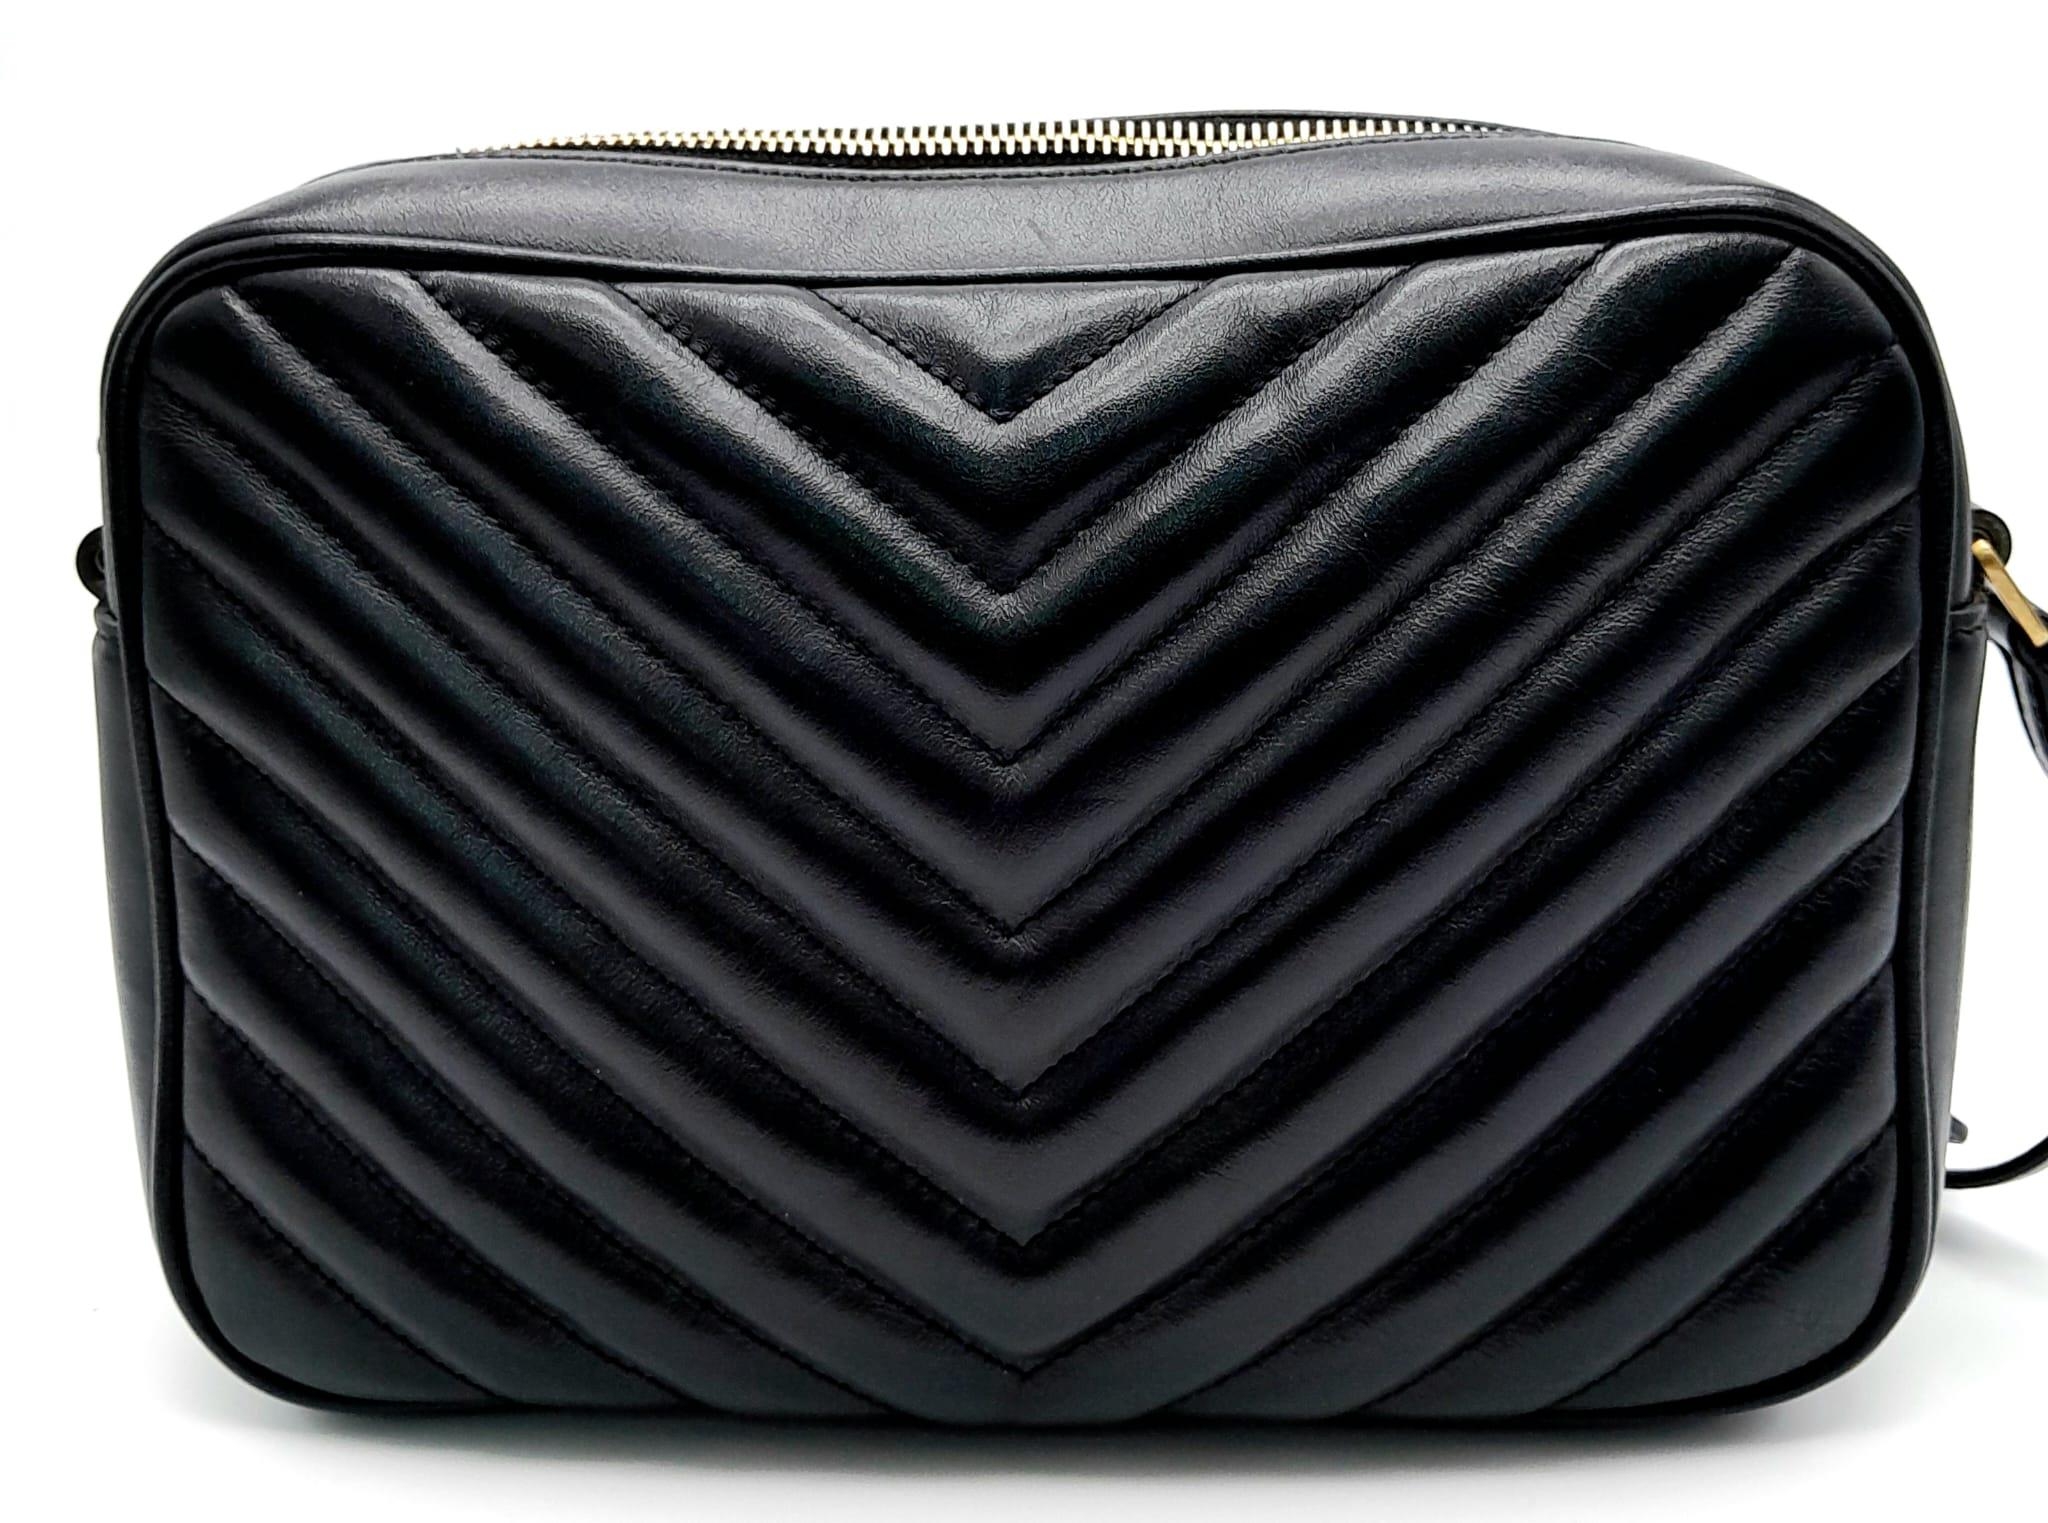 A YSL Saint Laurent Black Lou Matelasse Camera Bag. Leather exterior, gold-tone hardware, adjustable - Image 4 of 11